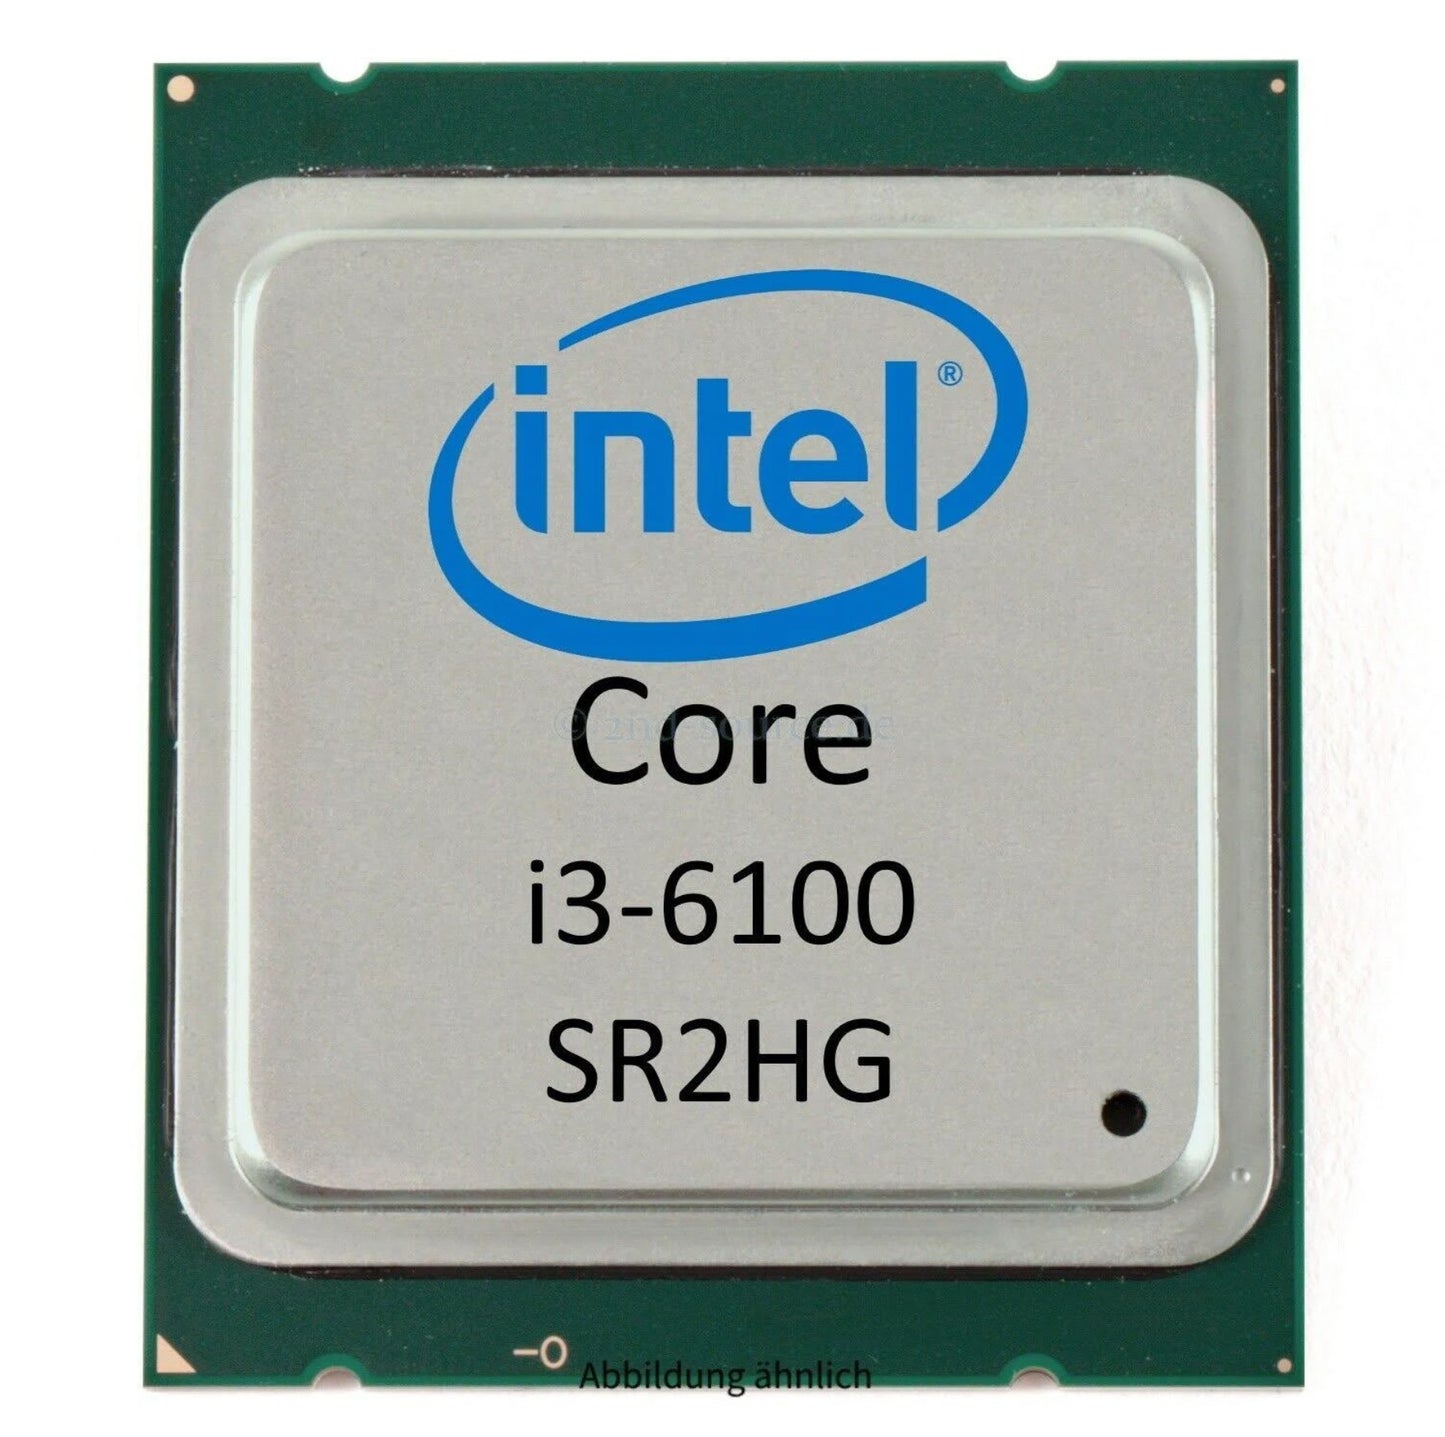 Intel Dual-Core i3-6100 3.70 GHz Processor - CM8066201927202 Used